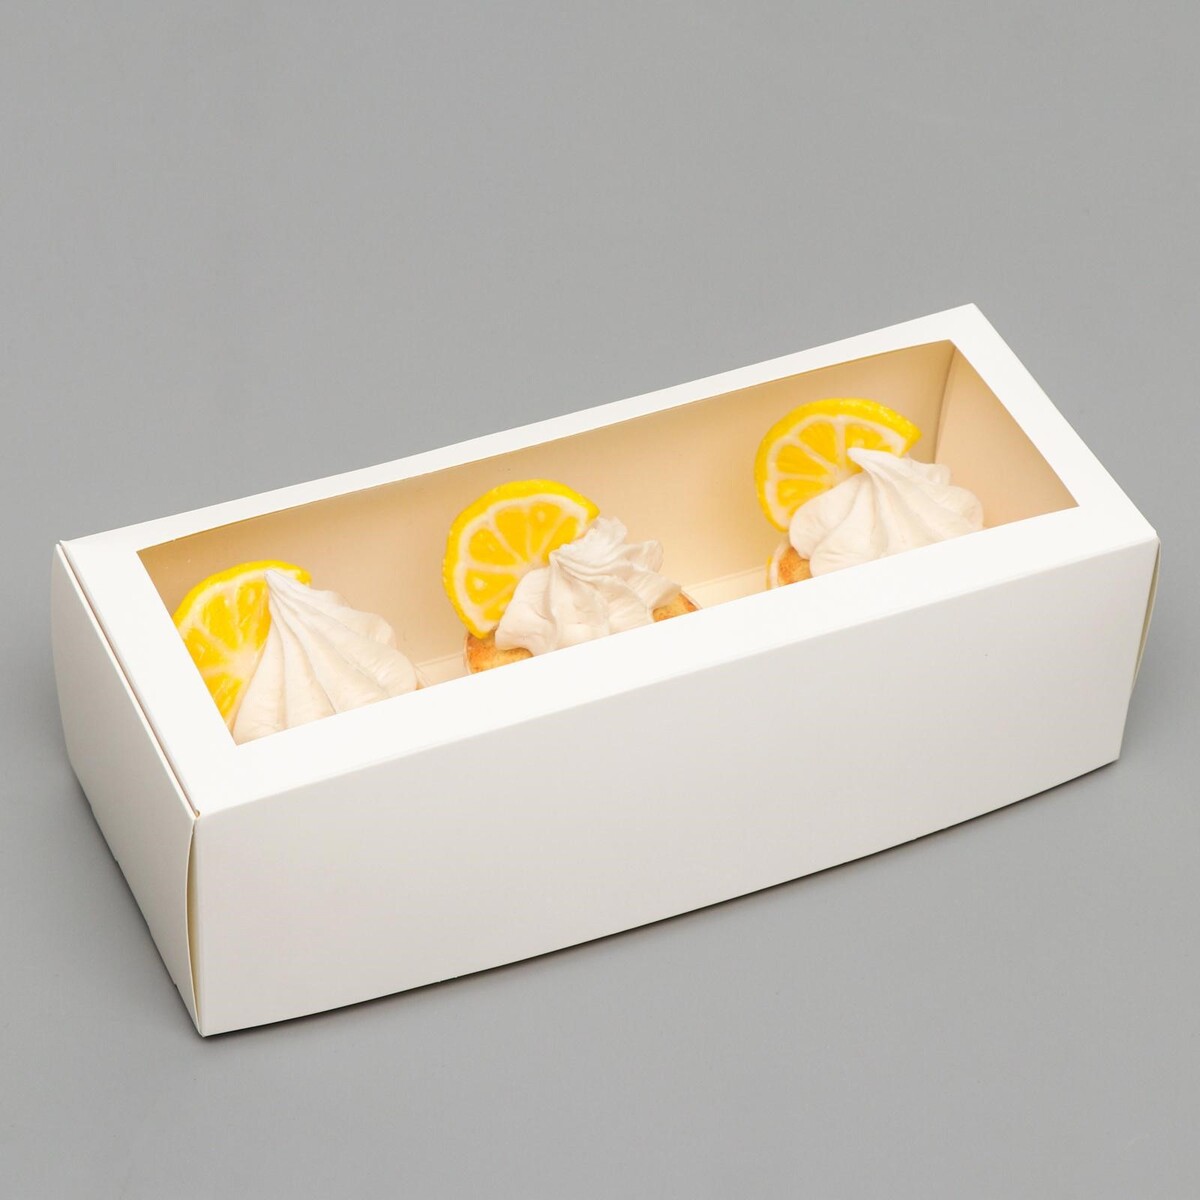 Коробка складная с окном под рулет, белая, 26 х 10 х 8 см коробка складная под 2 конфеты белая 5 х 10 5 х 3 5 см